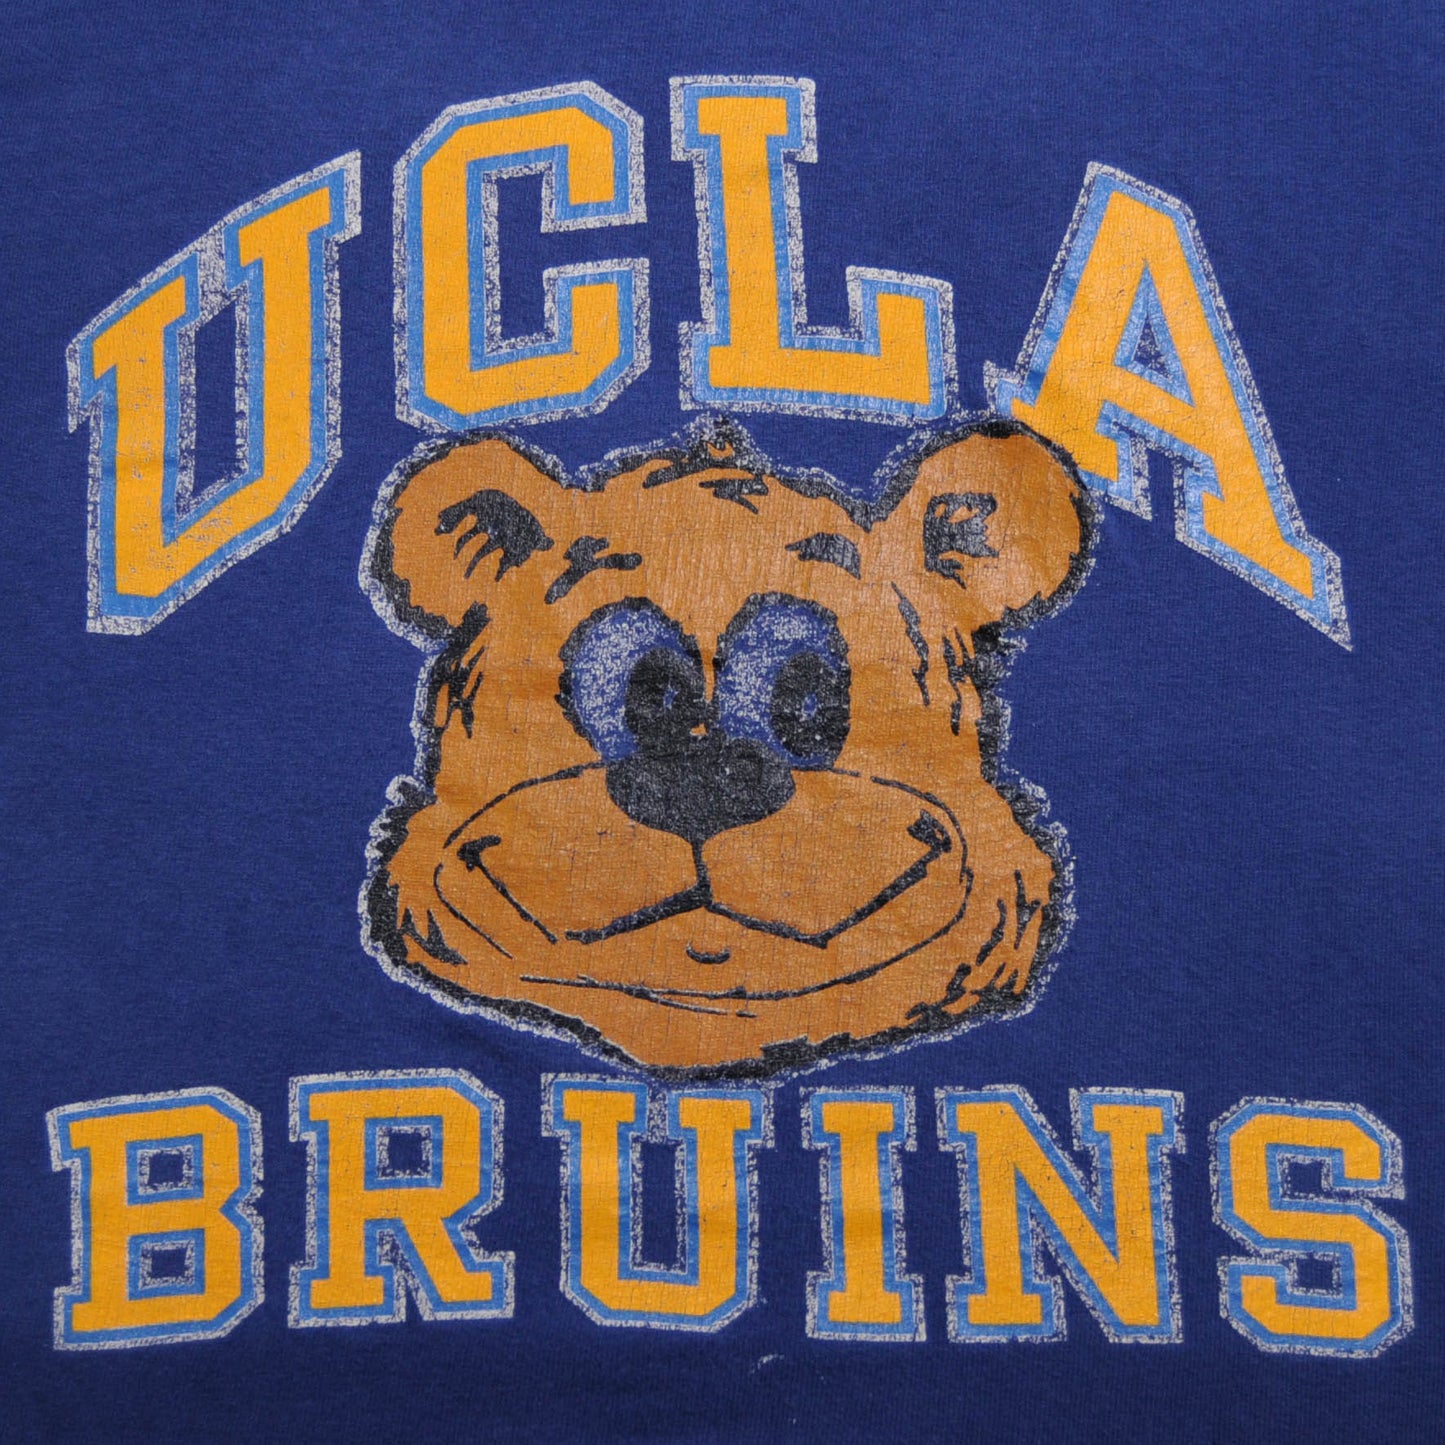 80's Champion UCLA BRUINS カレッジTシャツ (M)/A2046T-O